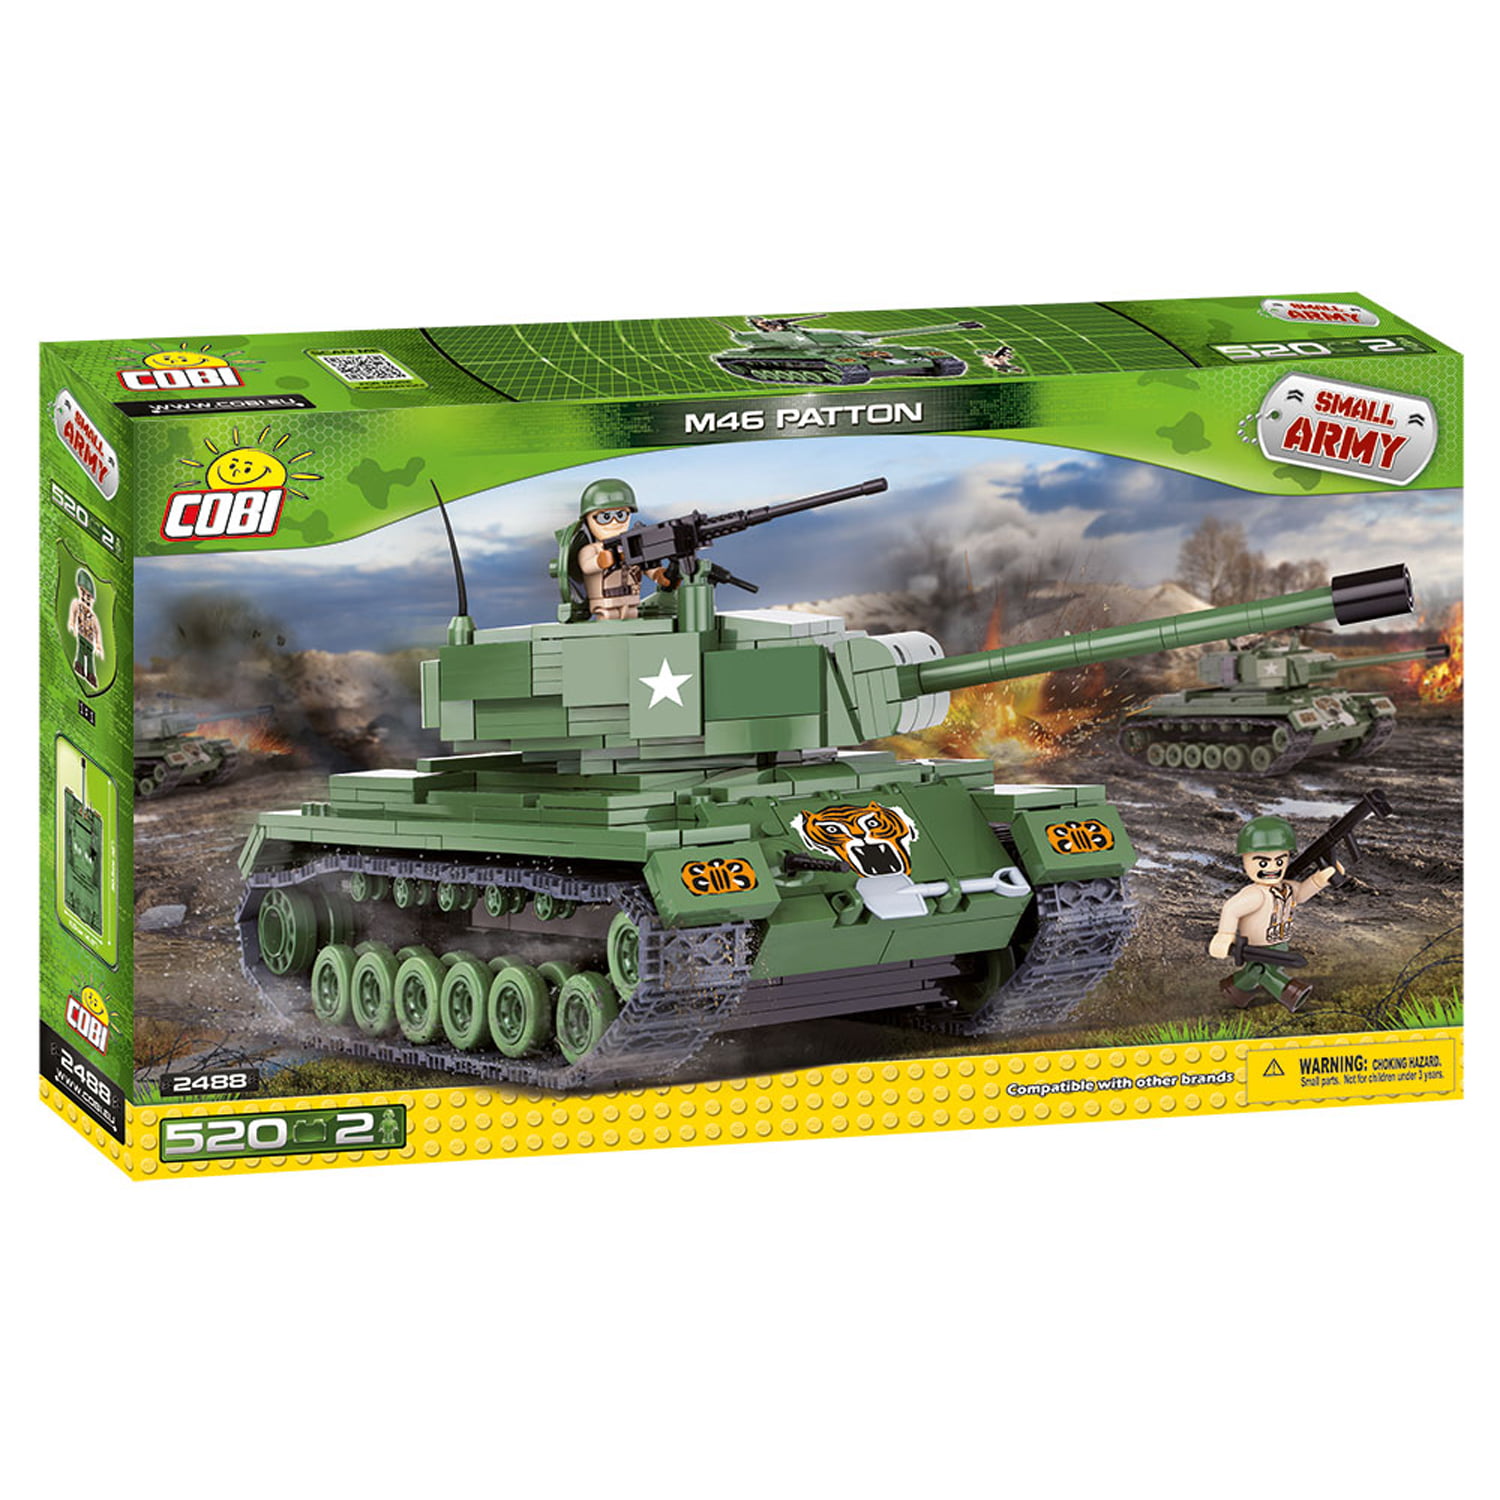 COBI Small Army M46 Patton